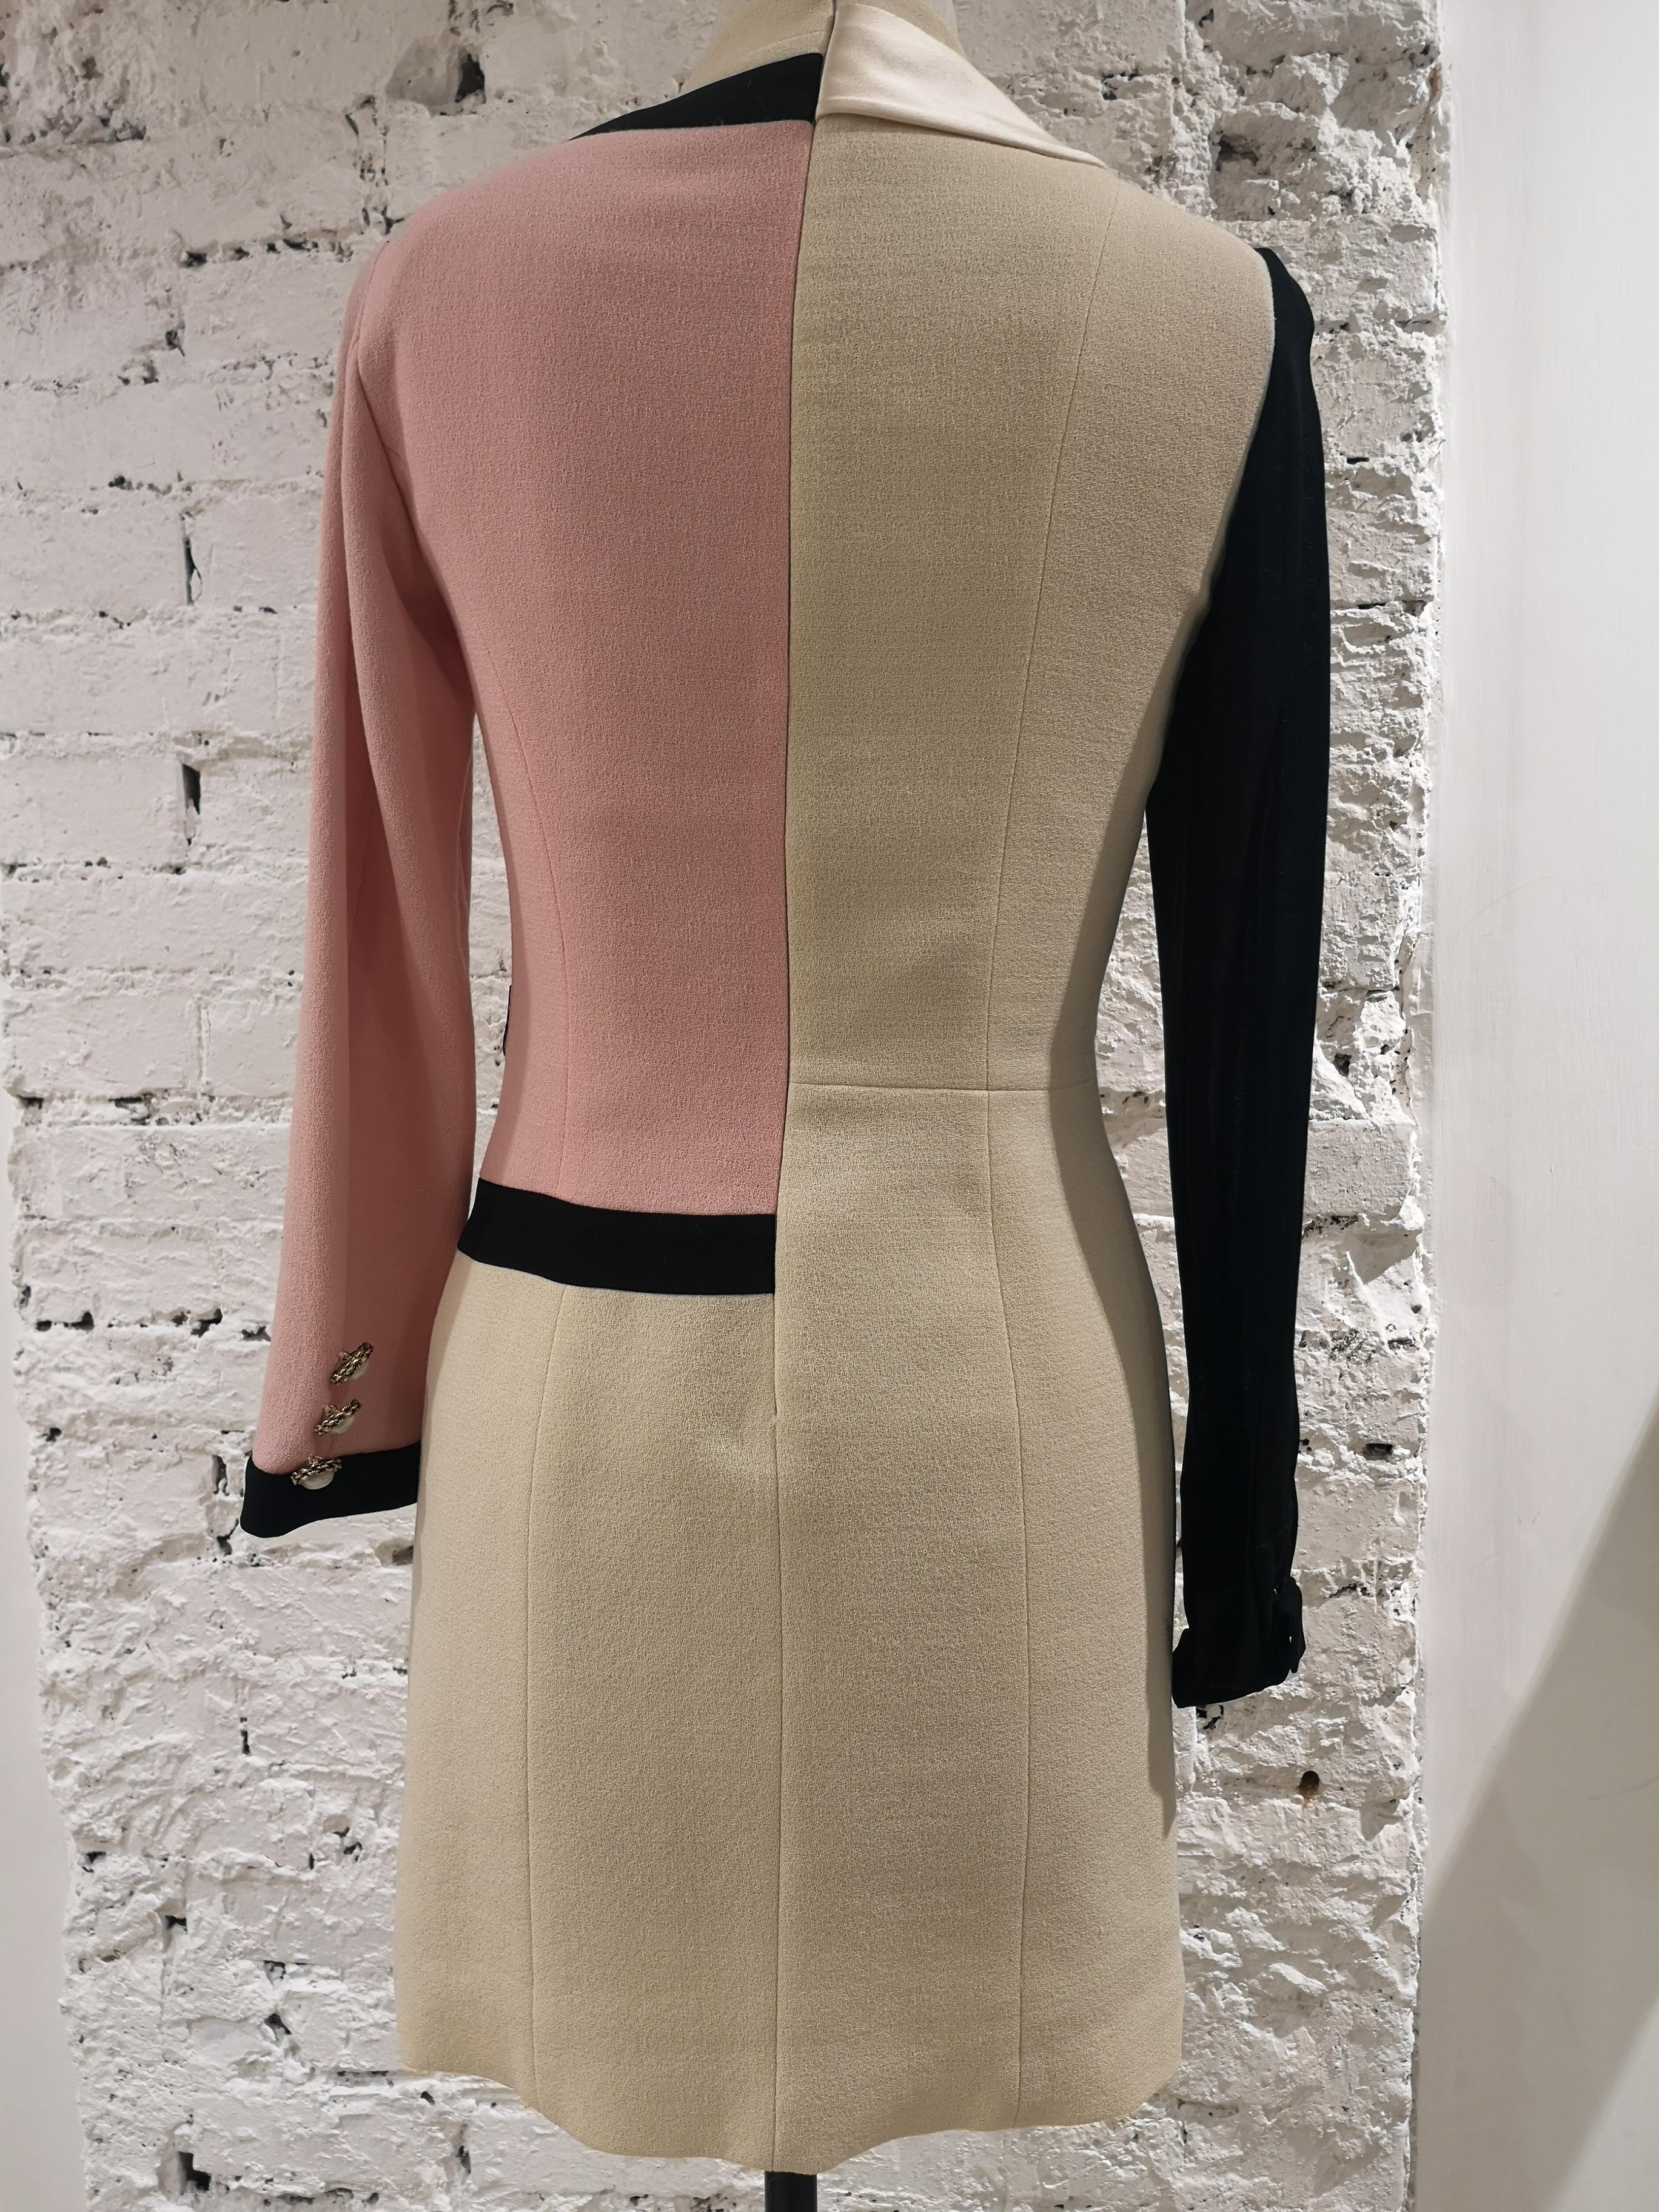 Moschino pink black wool dress 3